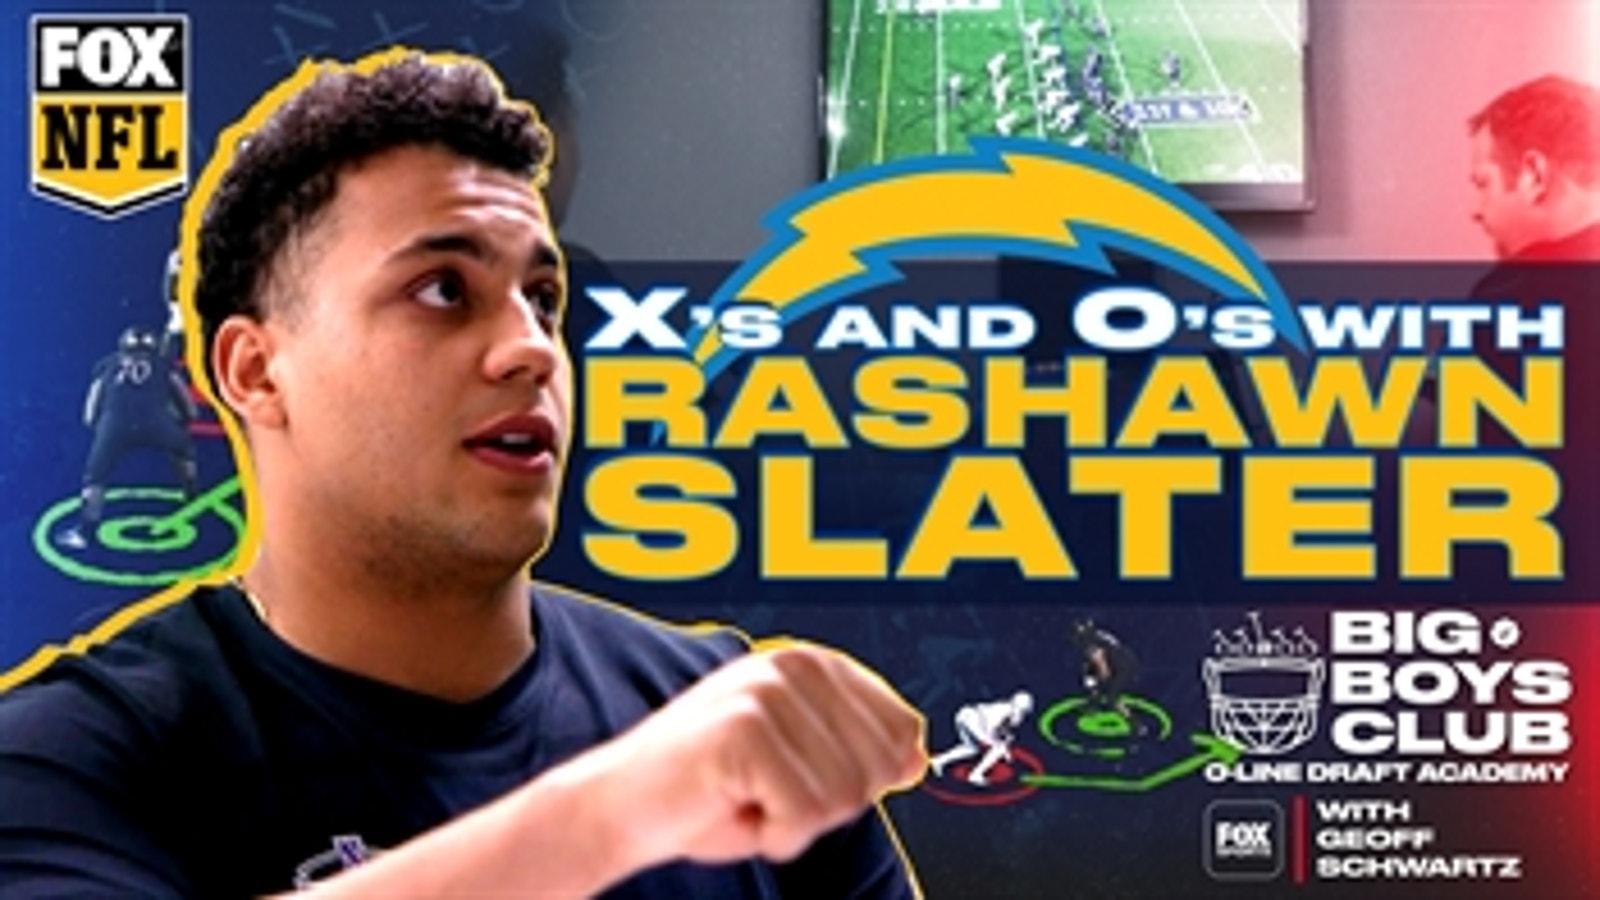 THE BIG BOYS CLUB: X’s and O’s with LA Charger - Rashawn Slater | FOX NFL